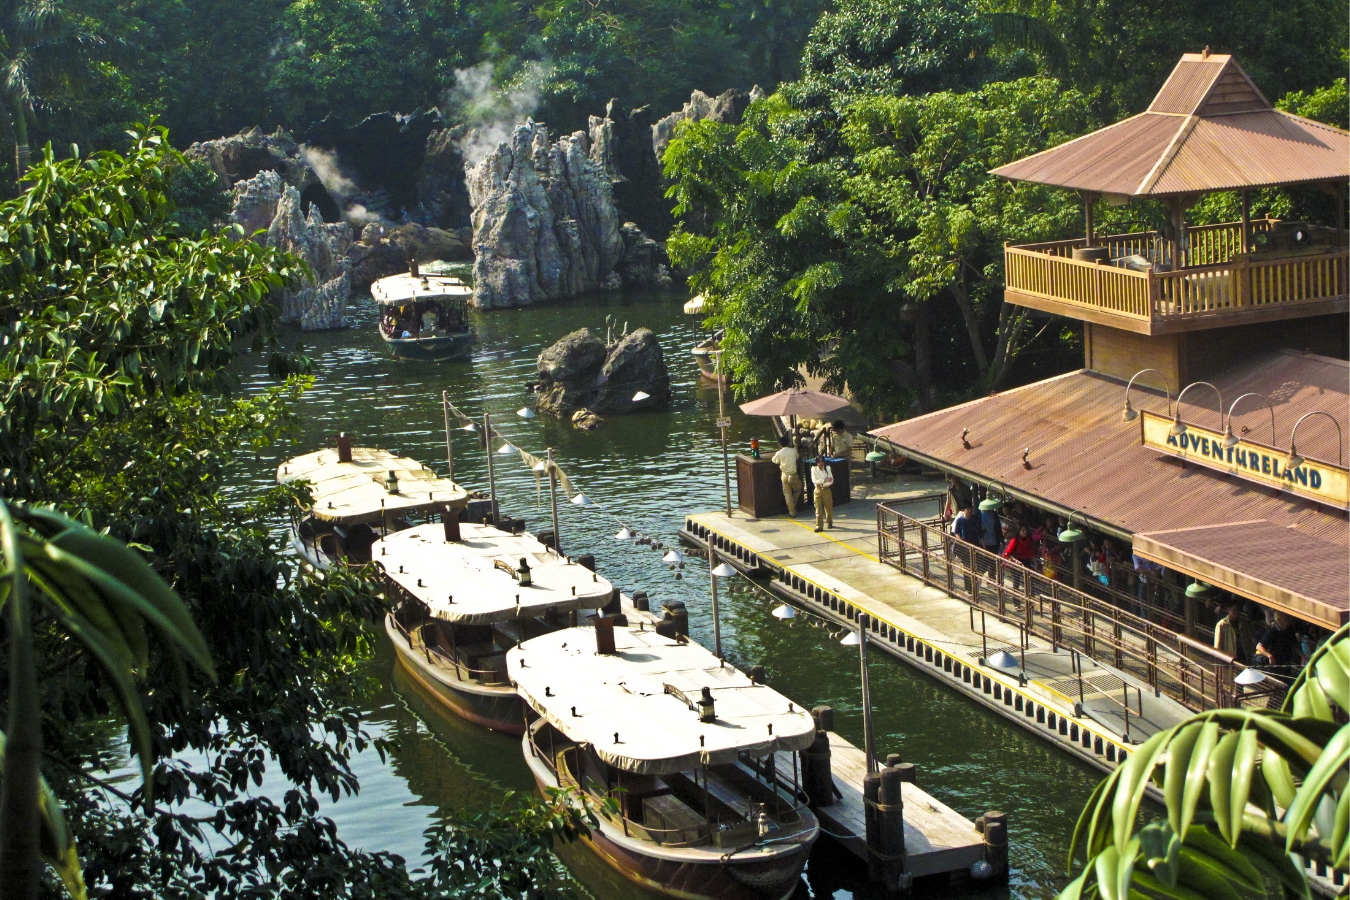 jungle river cruise adventureland hong kong disneyland